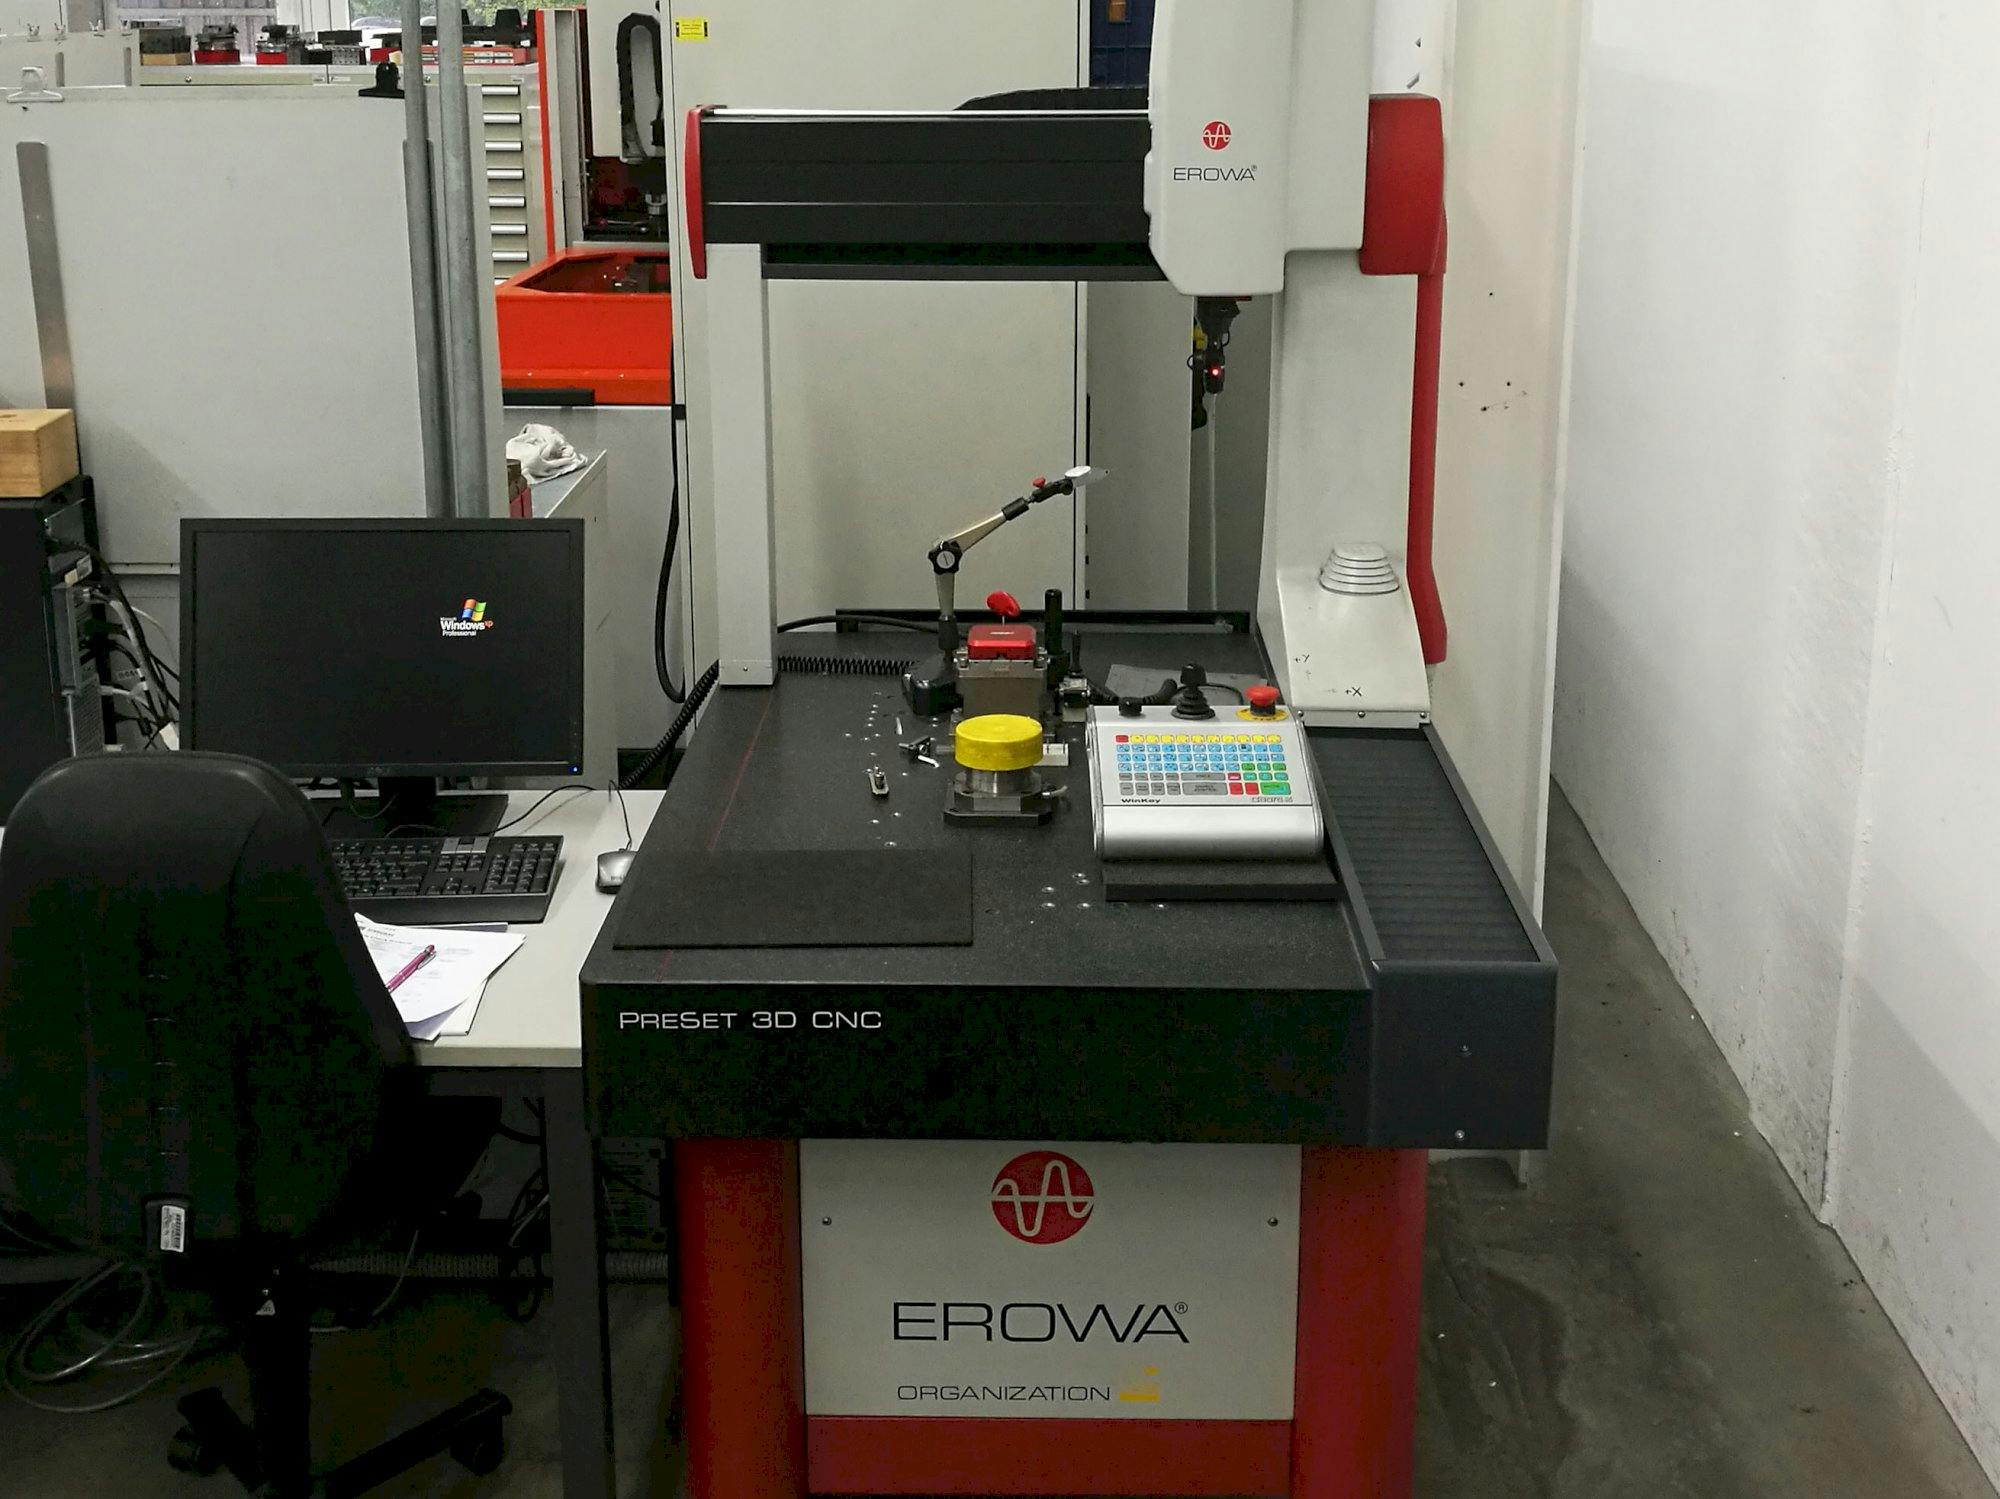 Vista Frontal  da EROWA PreSet 3D CNC  máquina